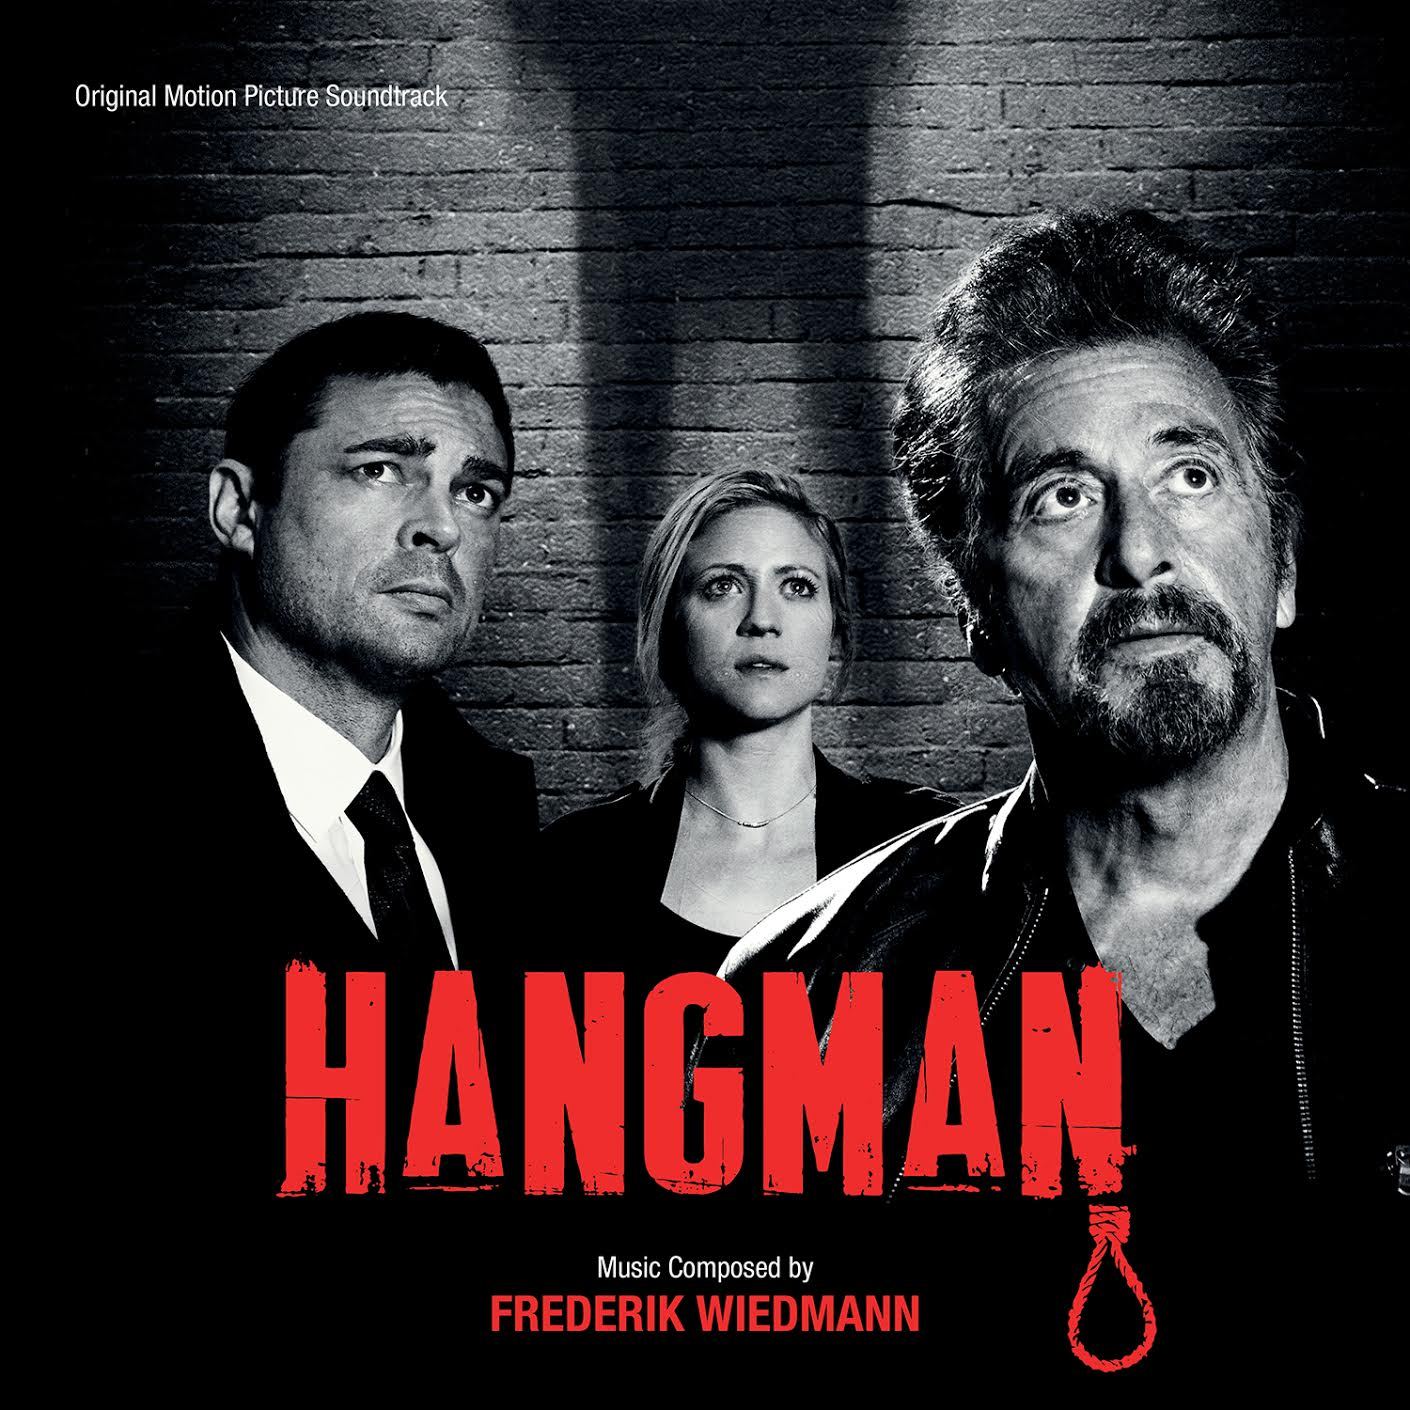 Hangman soundtrack